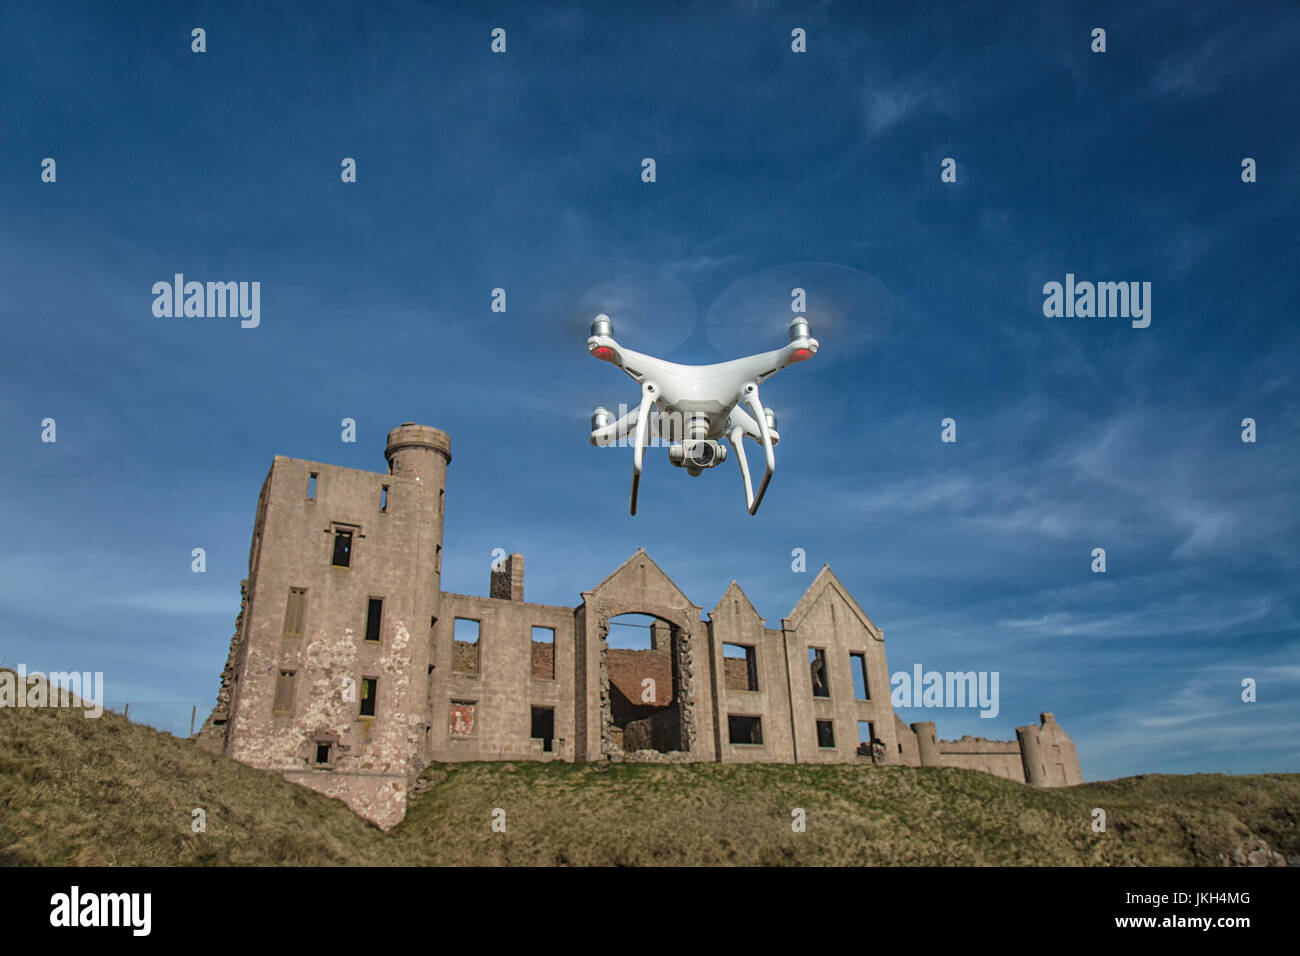 Drone at Slains Castle, Aberdeenshire Stock Photo